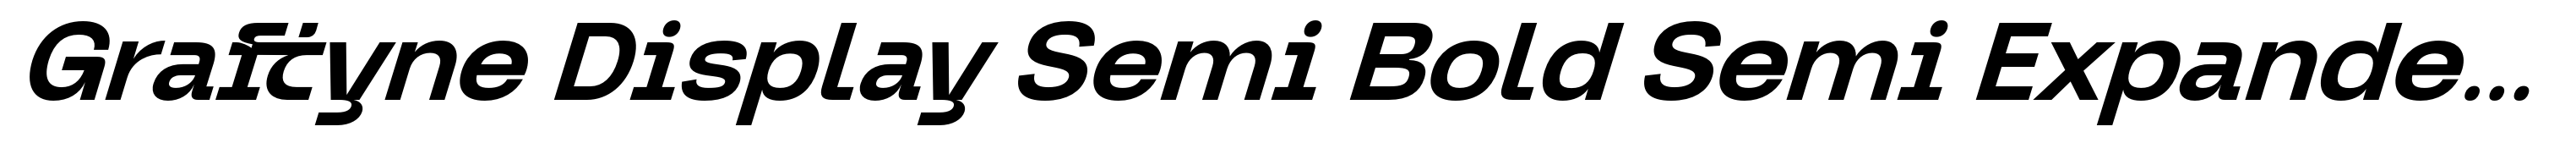 Graftyne Display Semi Bold Semi Expanded Italic